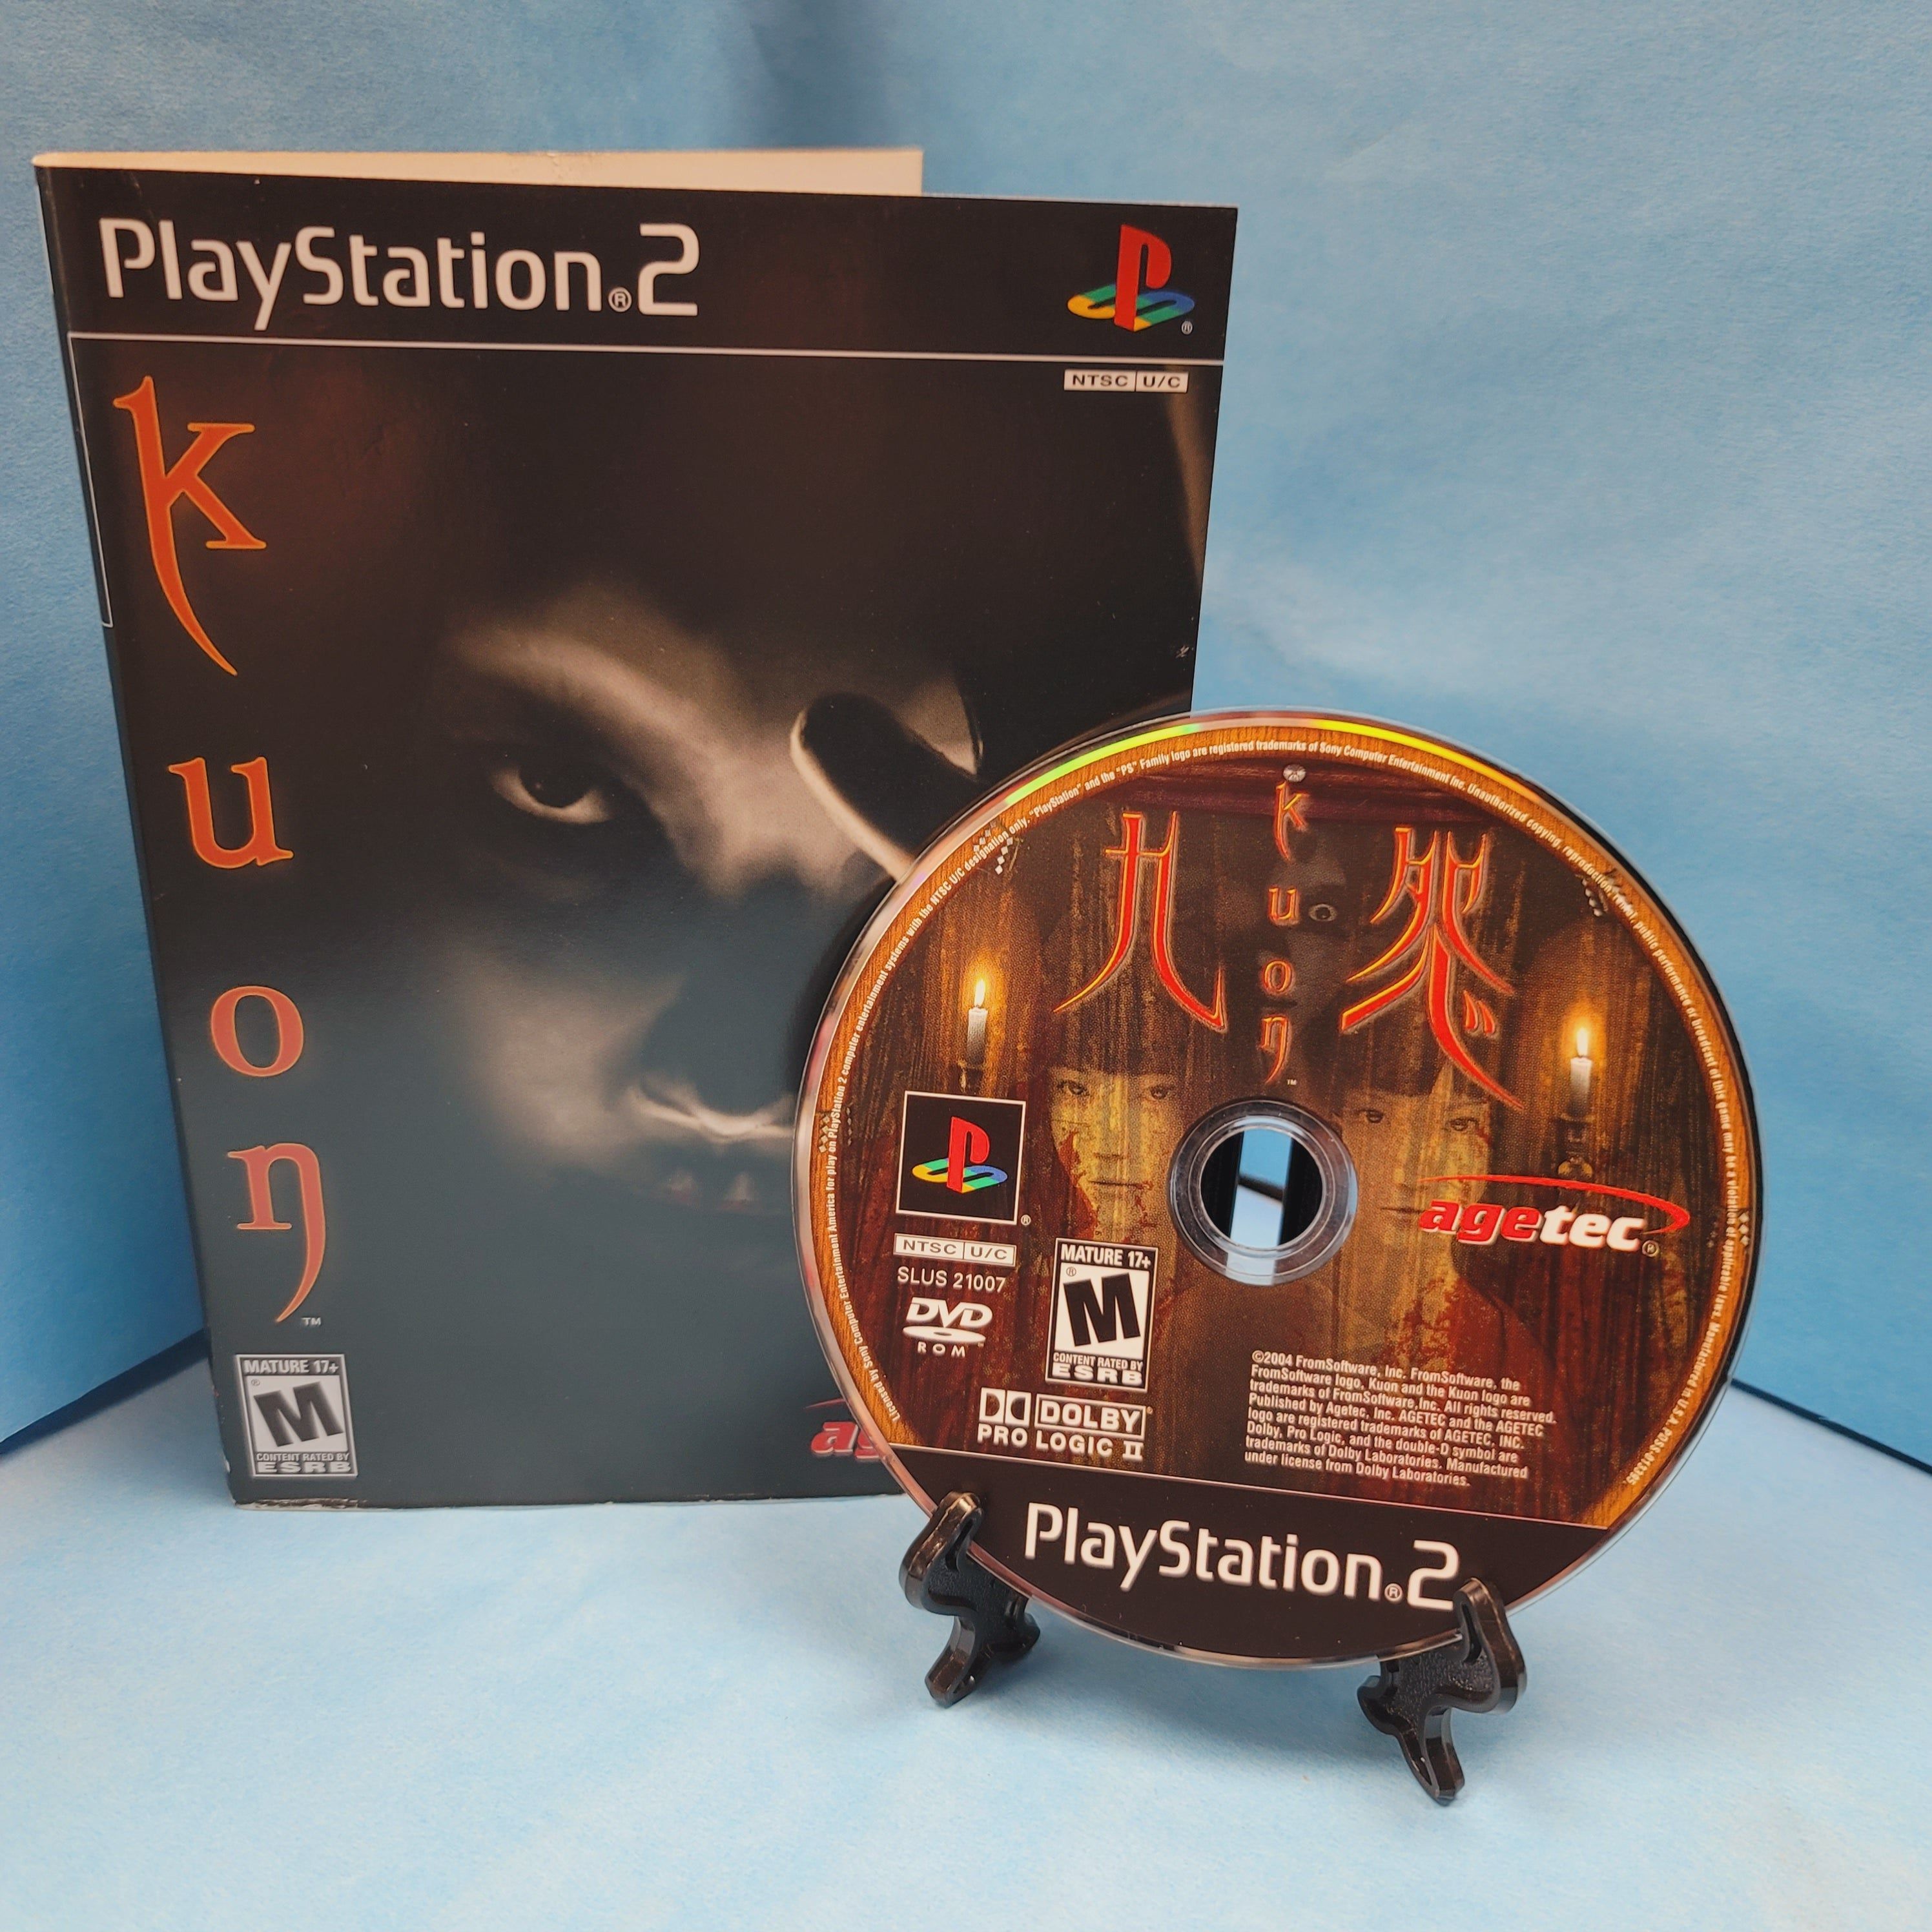 PS2 - Kuon (Original Cover Art / No Manual)